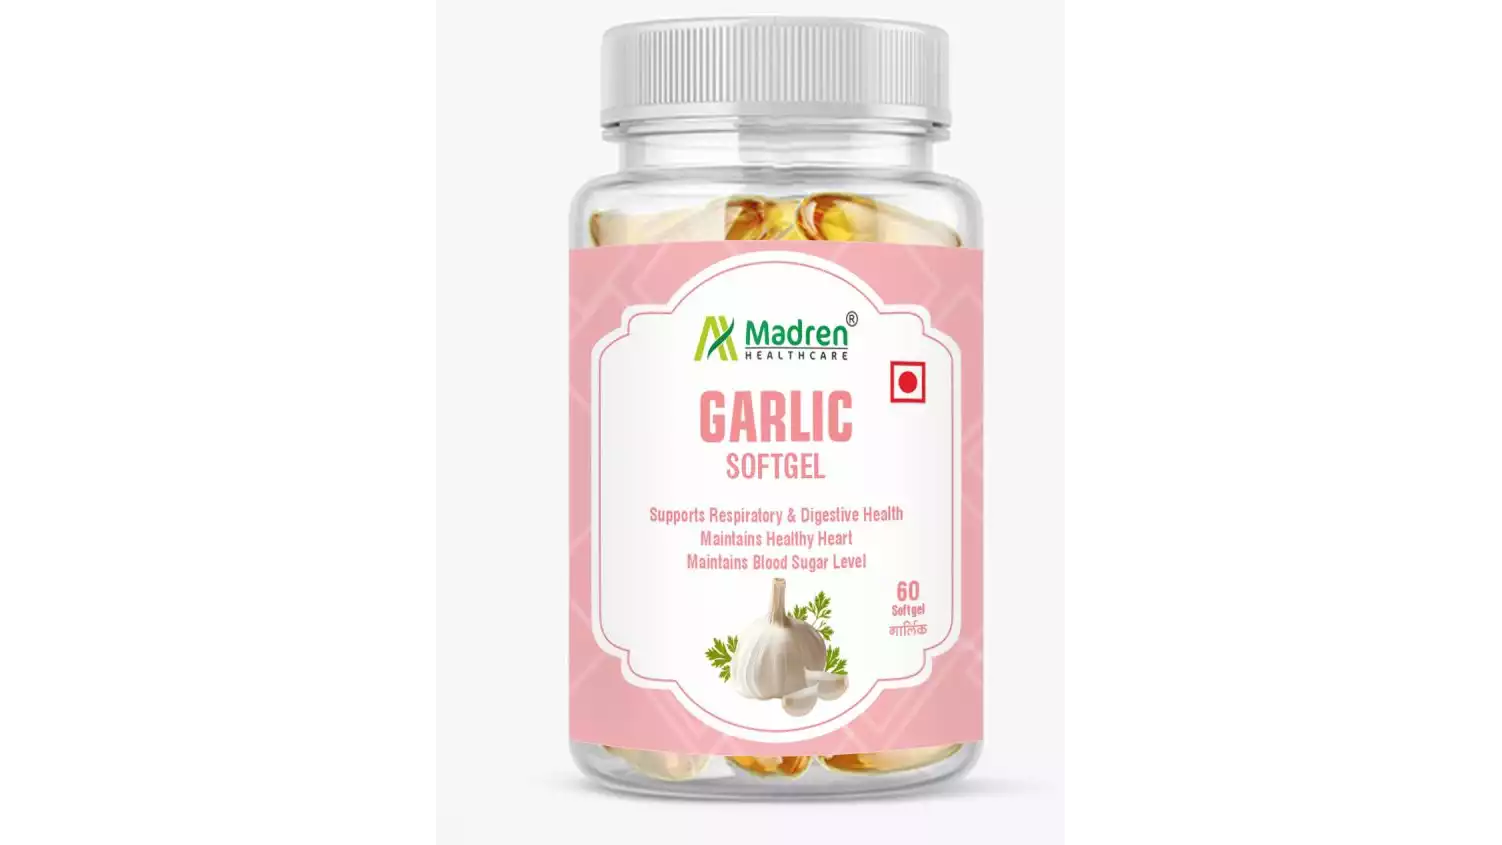 Madren Healthcare Garlic Oil Softgel Capsule (60caps)